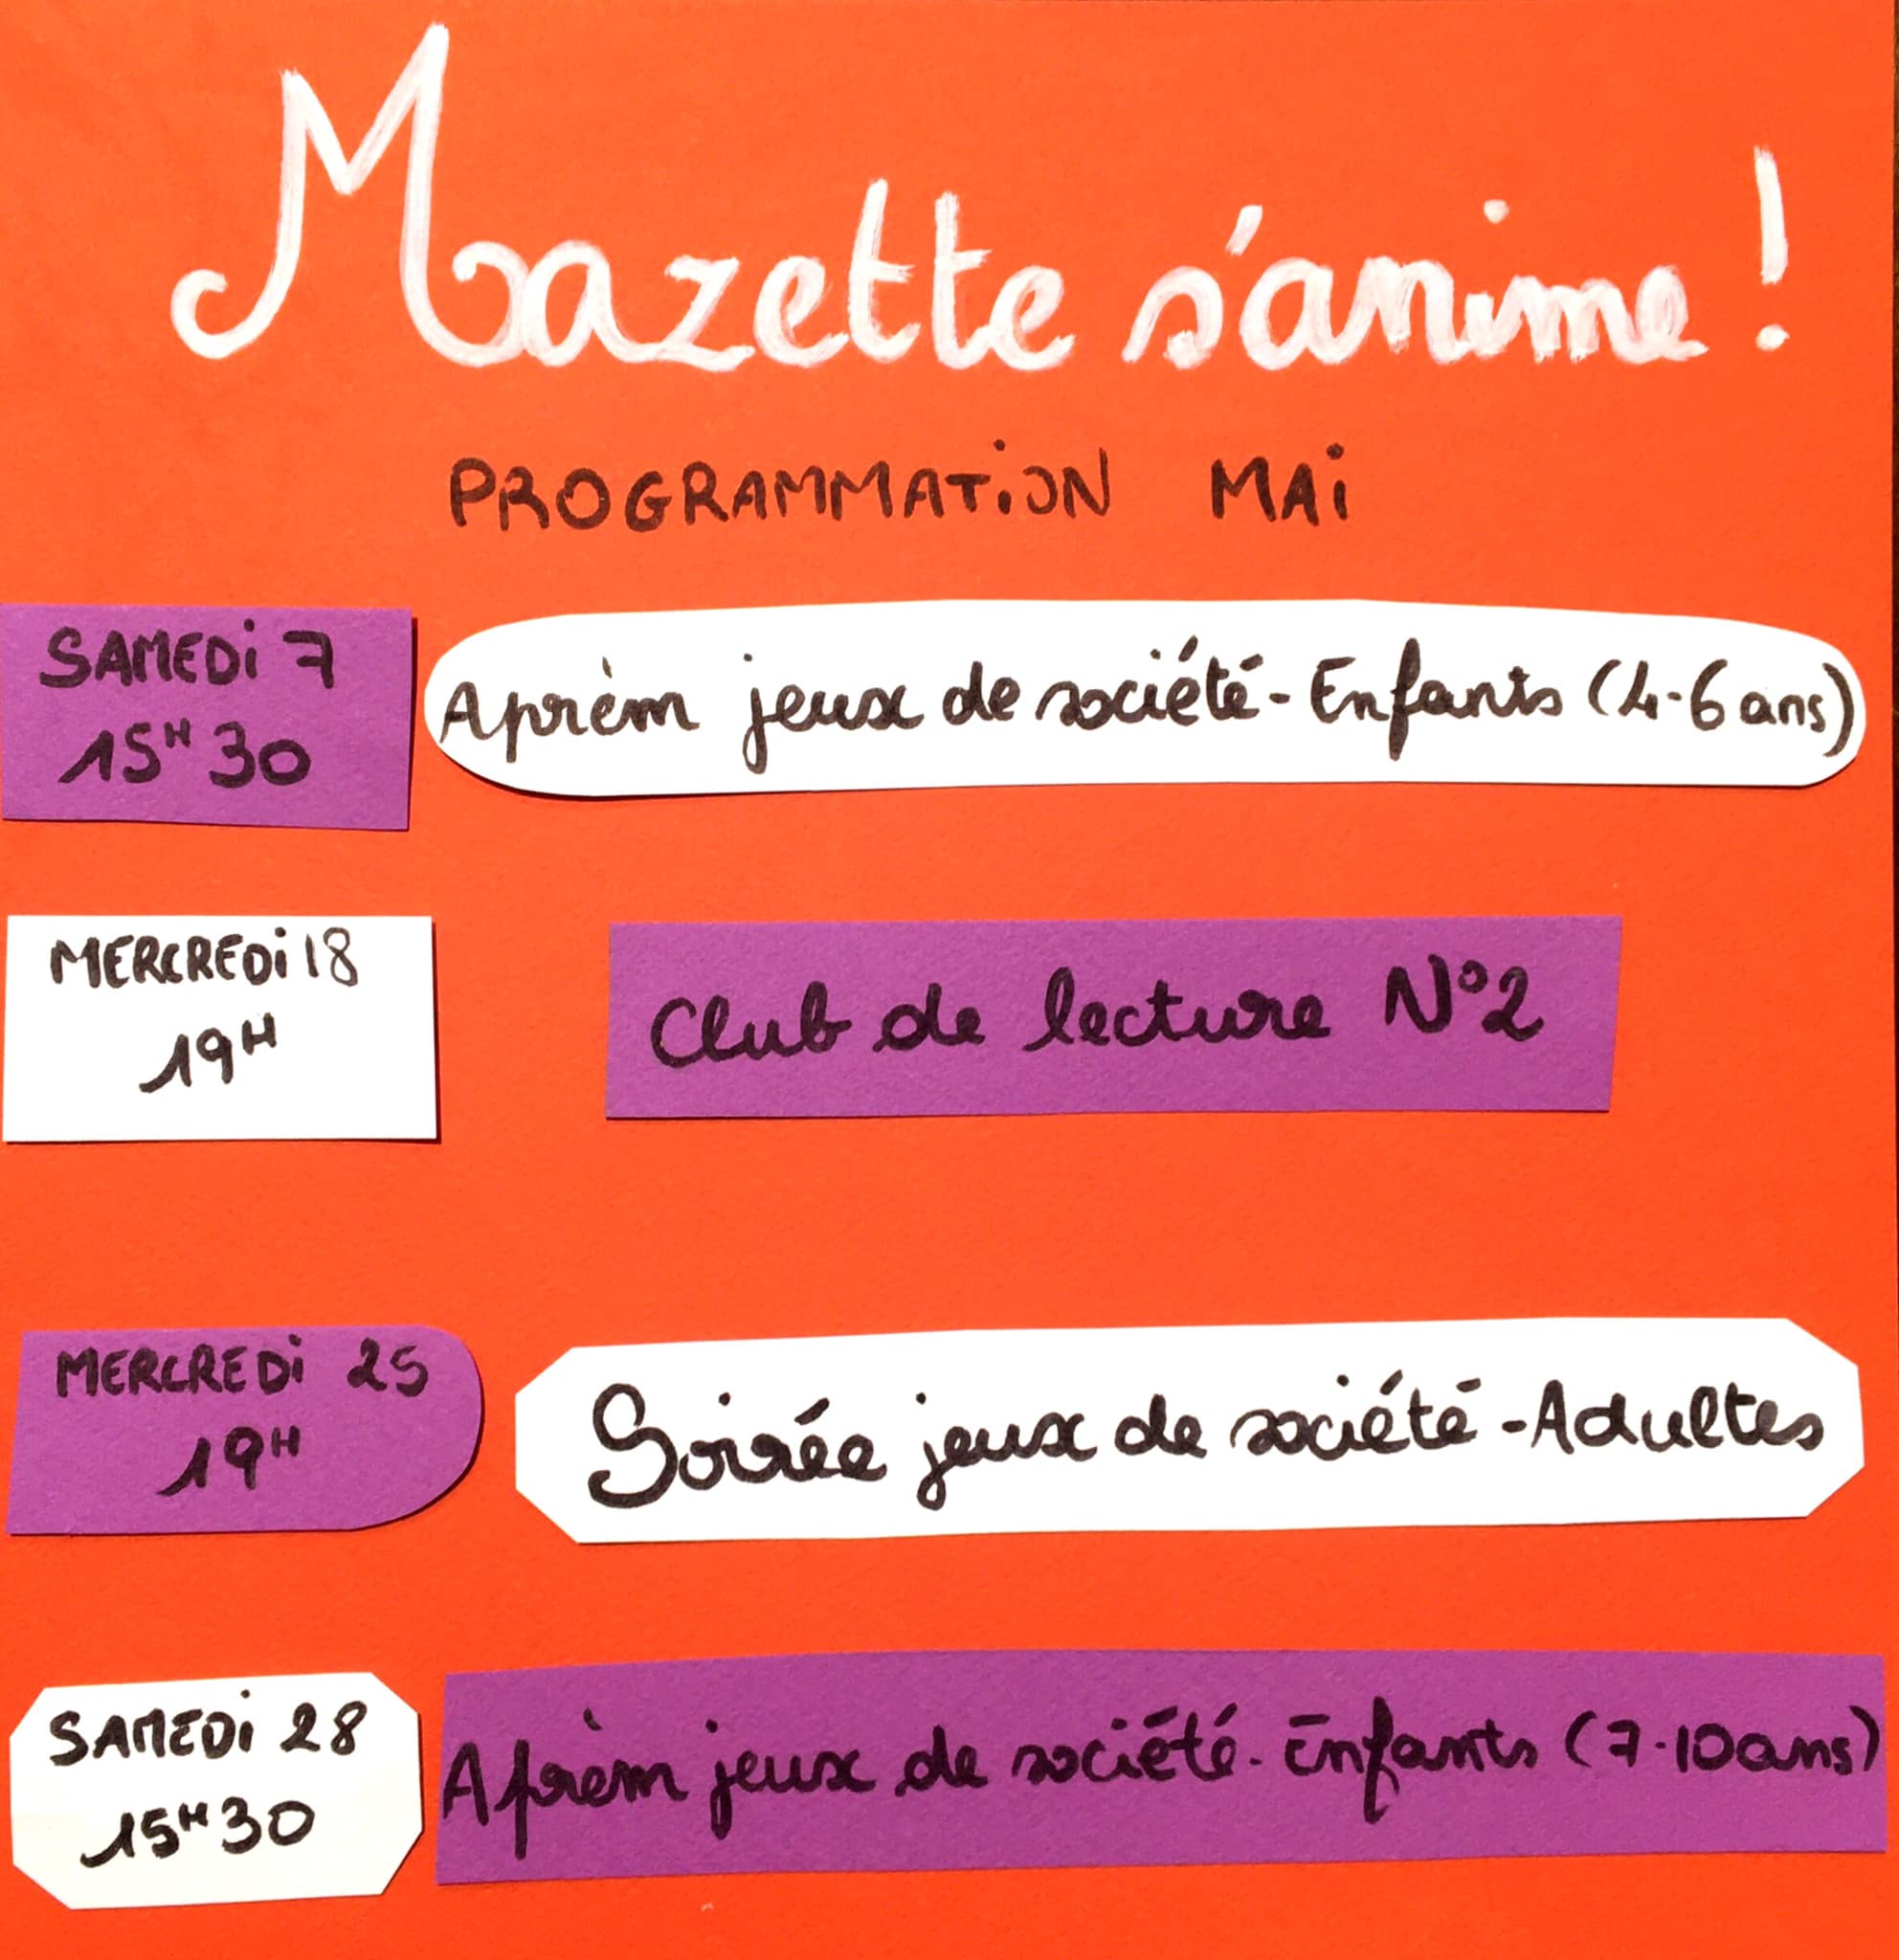 Logo La Librairie Mazette s'anime